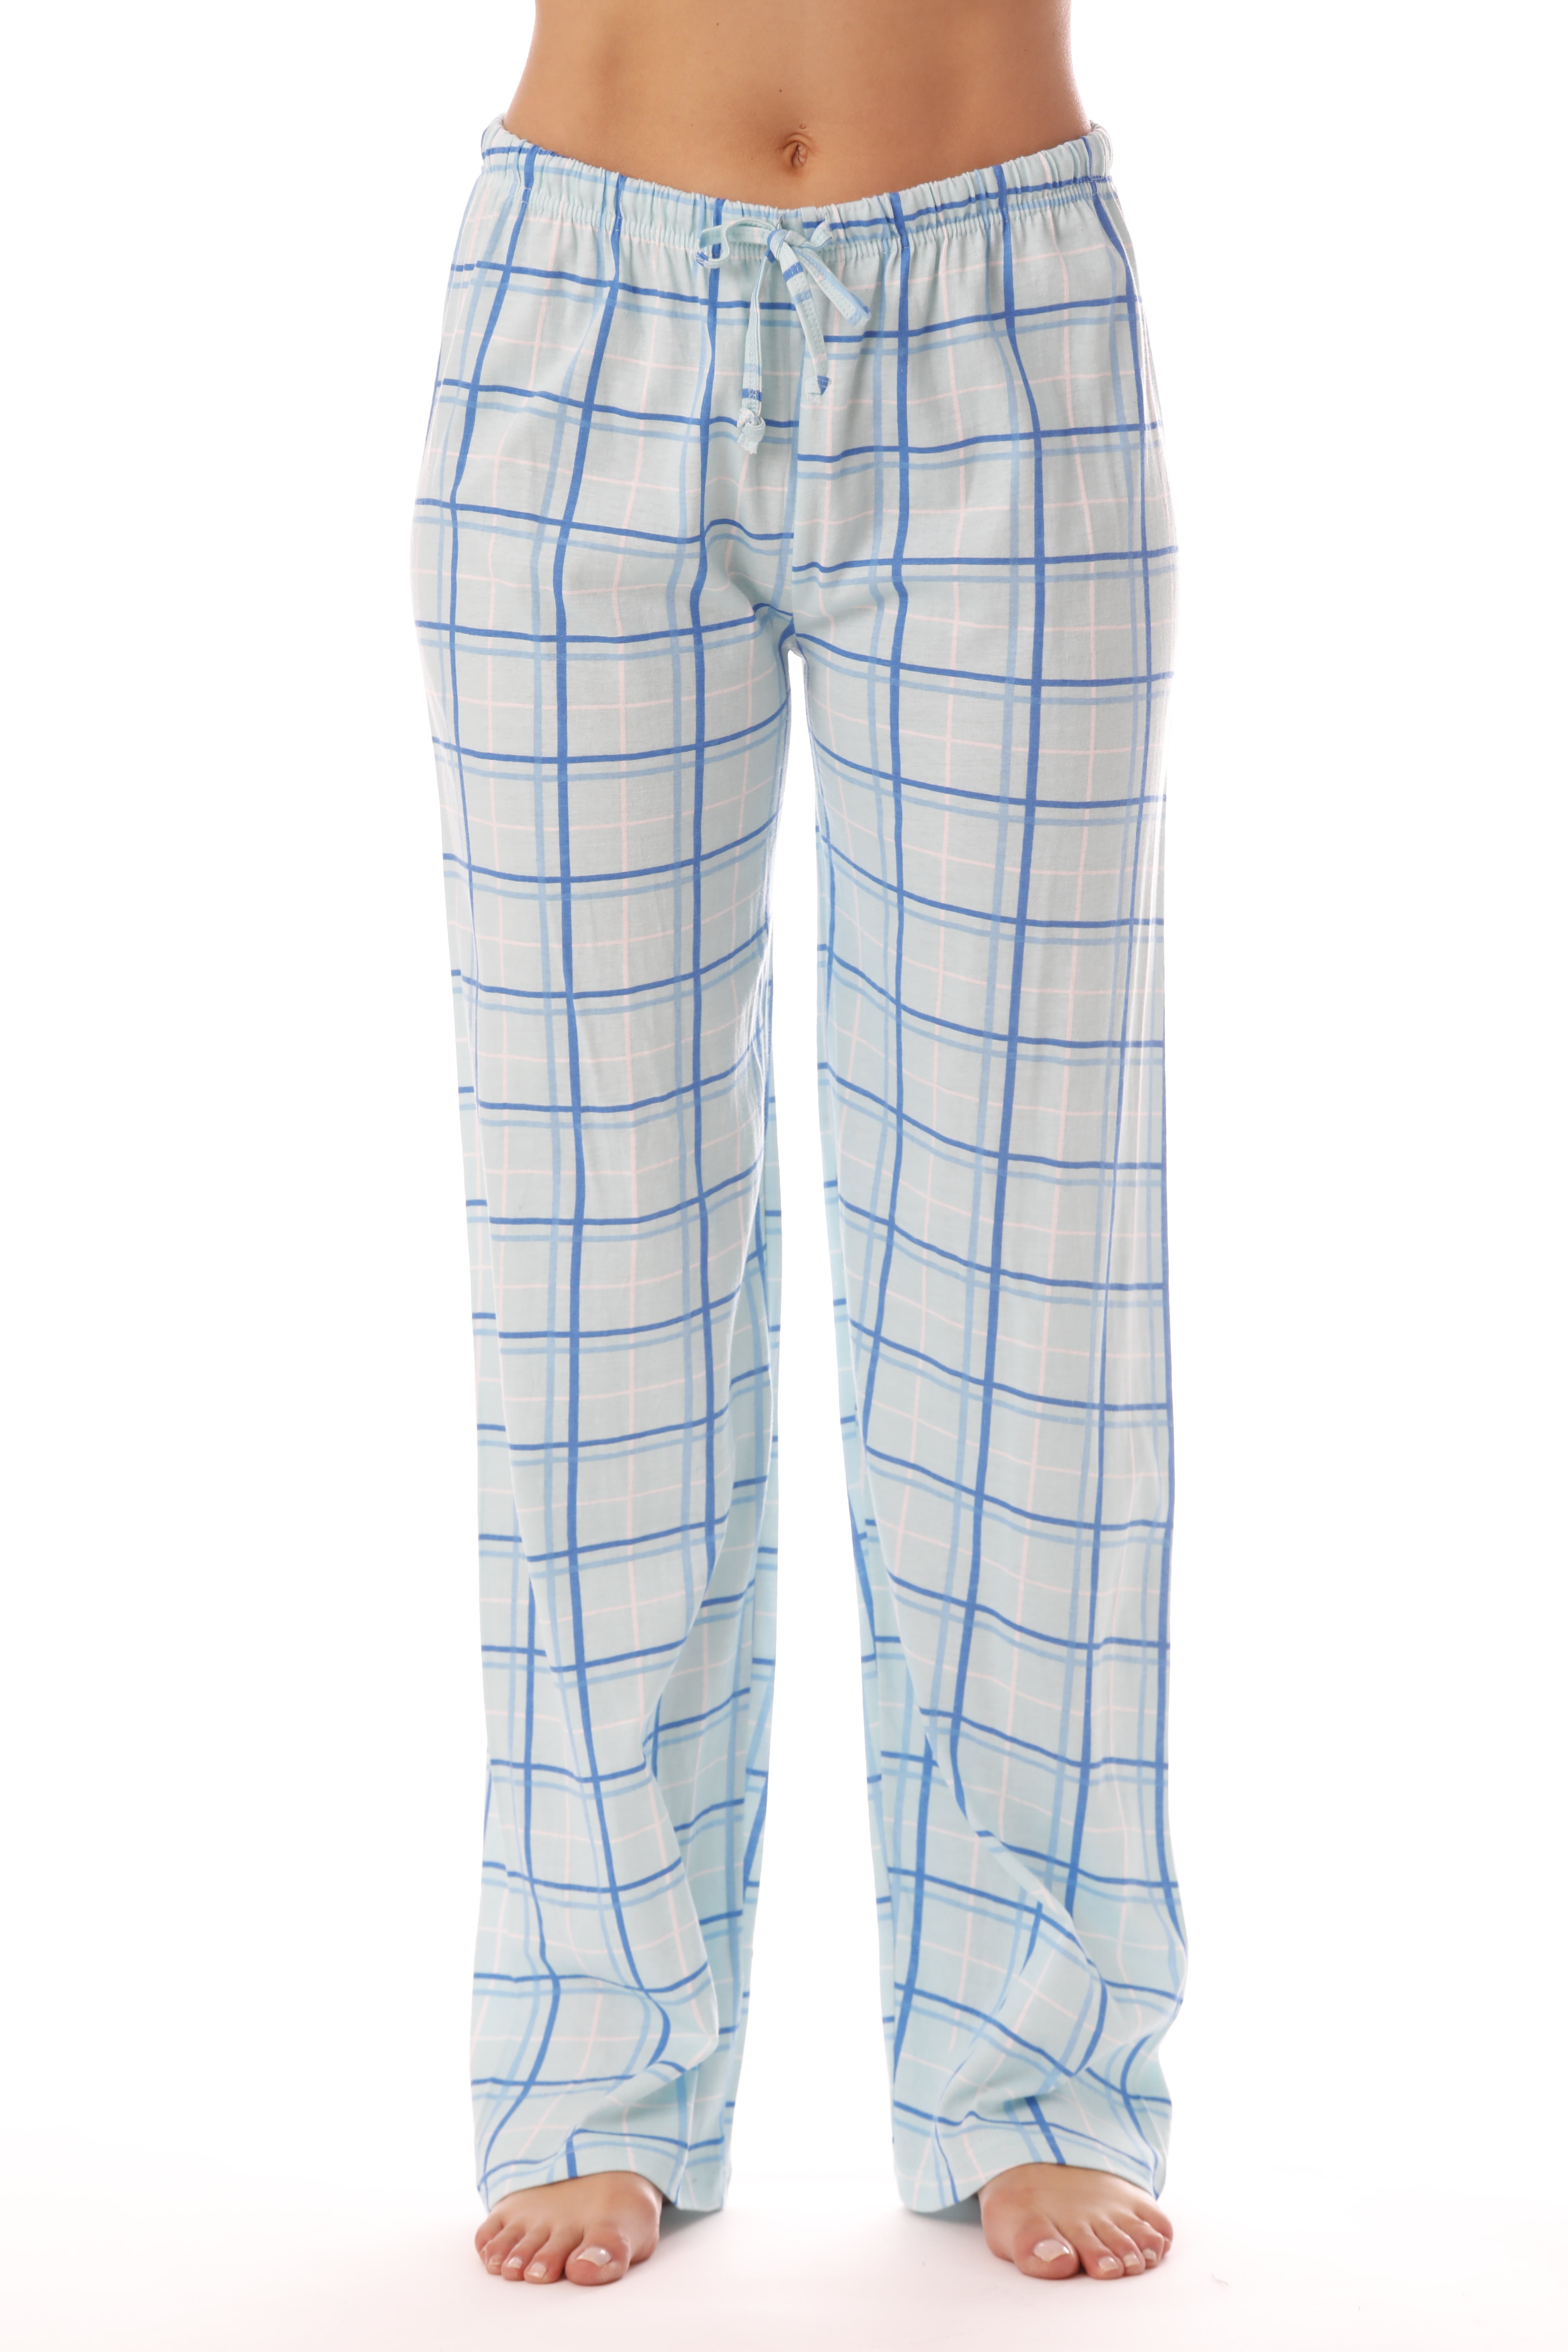 Just Love 100% Cotton Jersey Women Plaid Pajama Pants Sleepwear